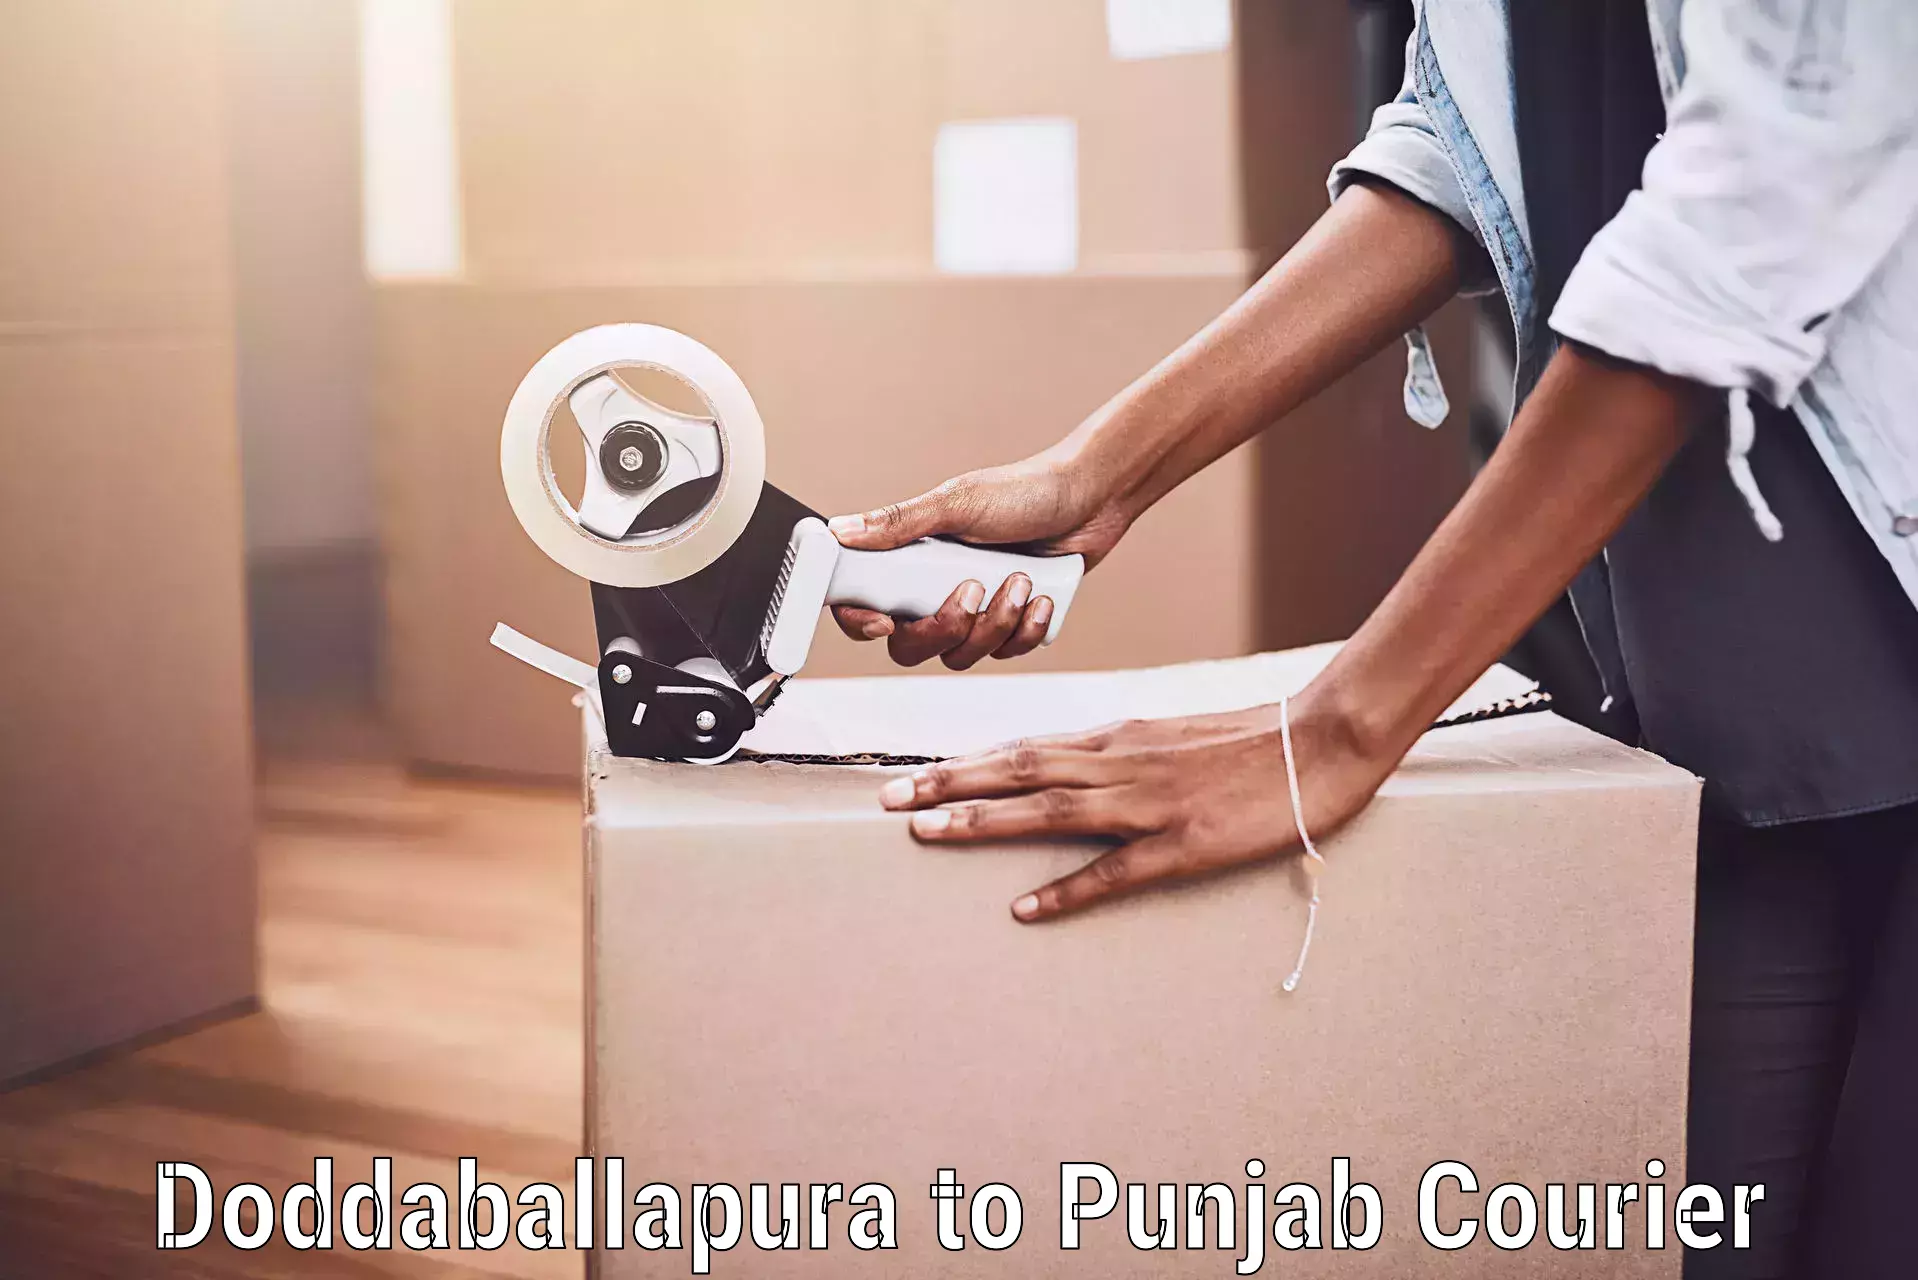 Baggage delivery management Doddaballapura to Punjab